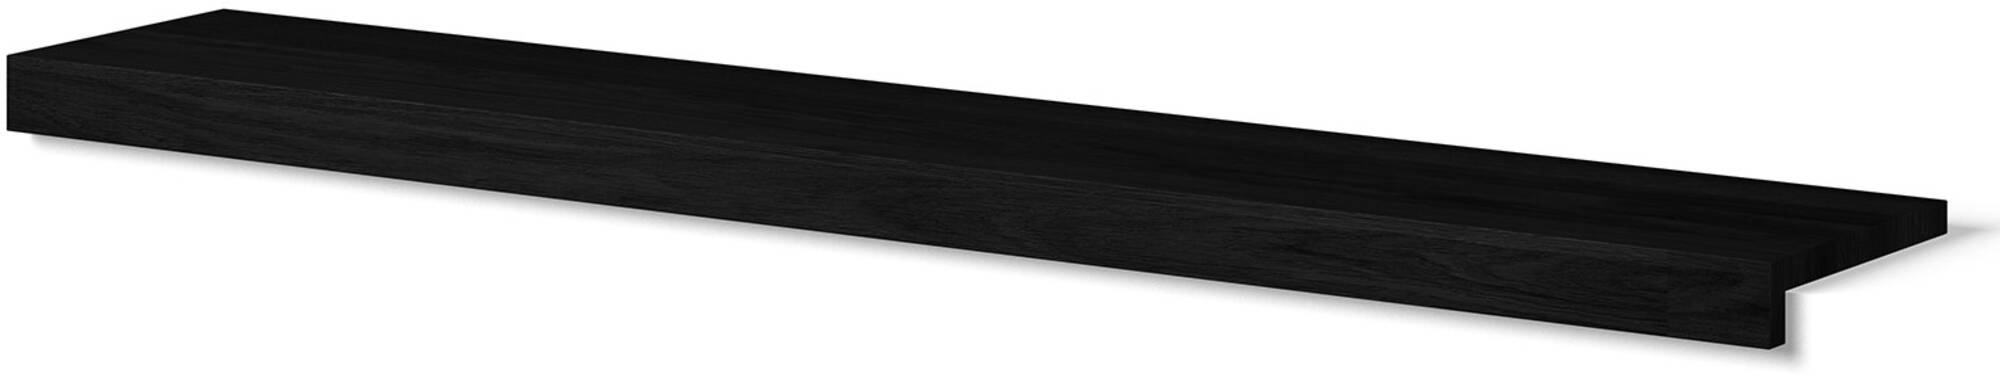 Looox Wooden Cover Afdekblad 100x25x4 cm Black